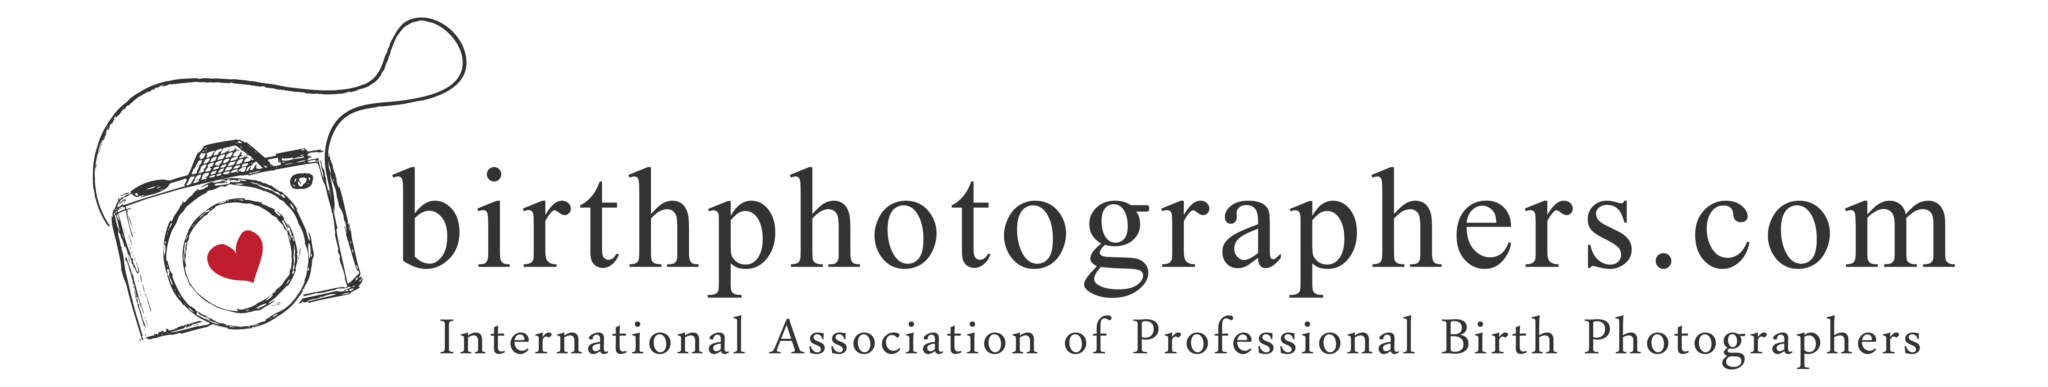 birthphotographers-logo-copy.png